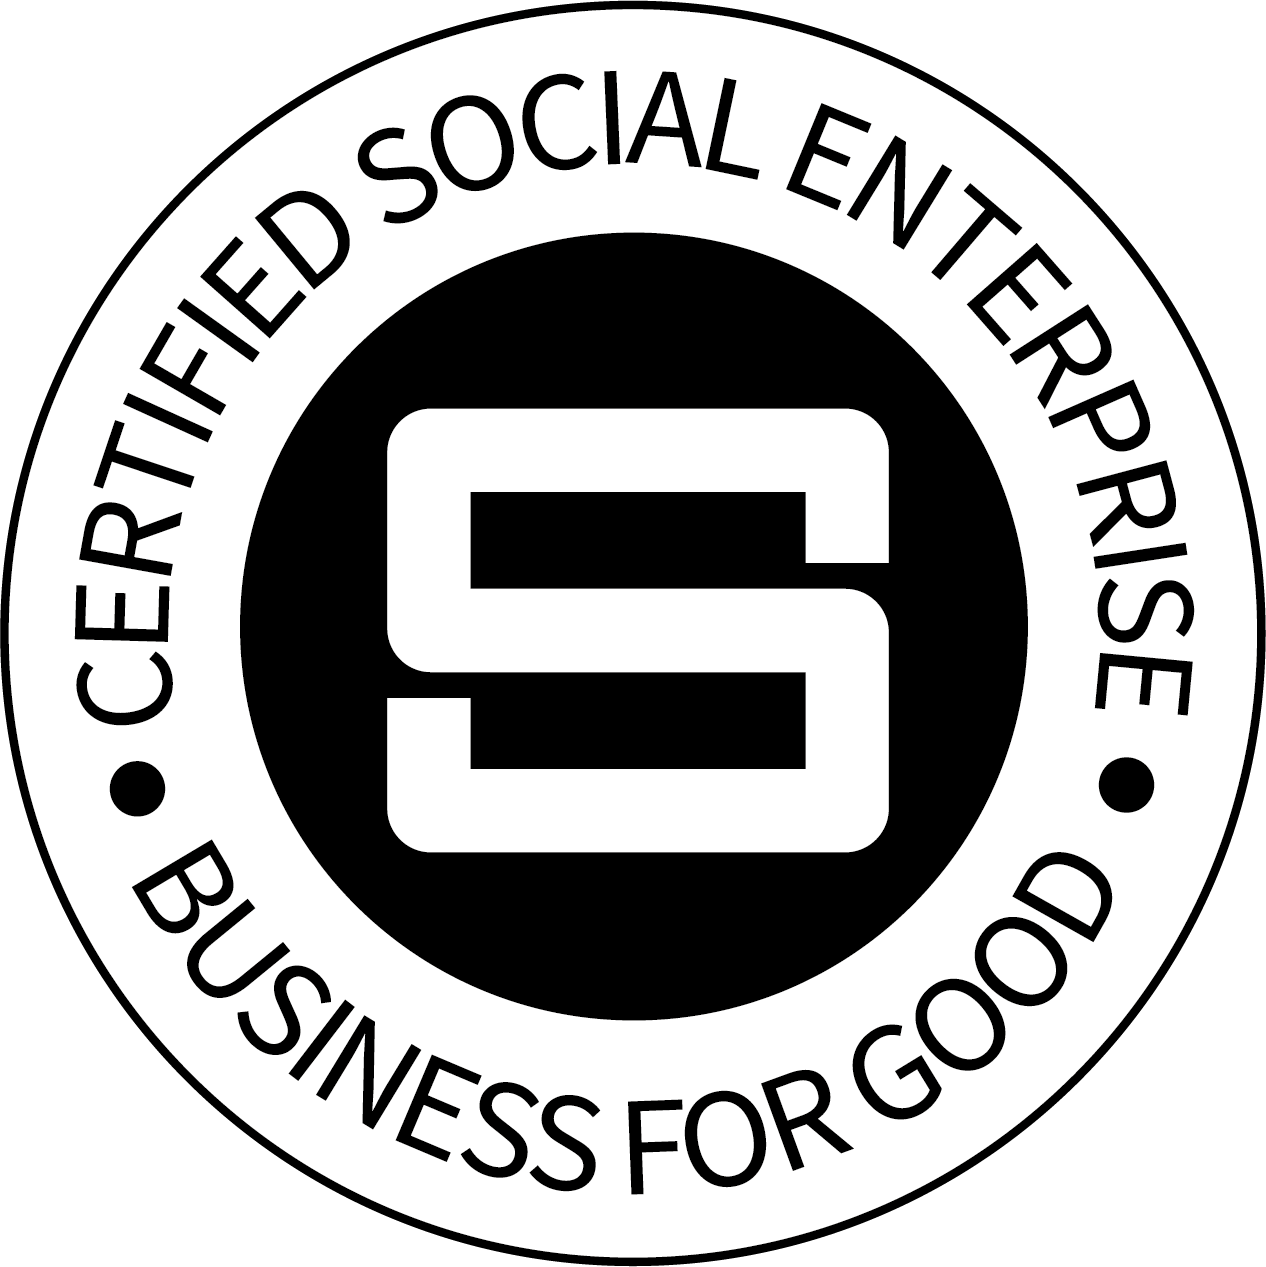 Certified Social Enterprise - Business for Good